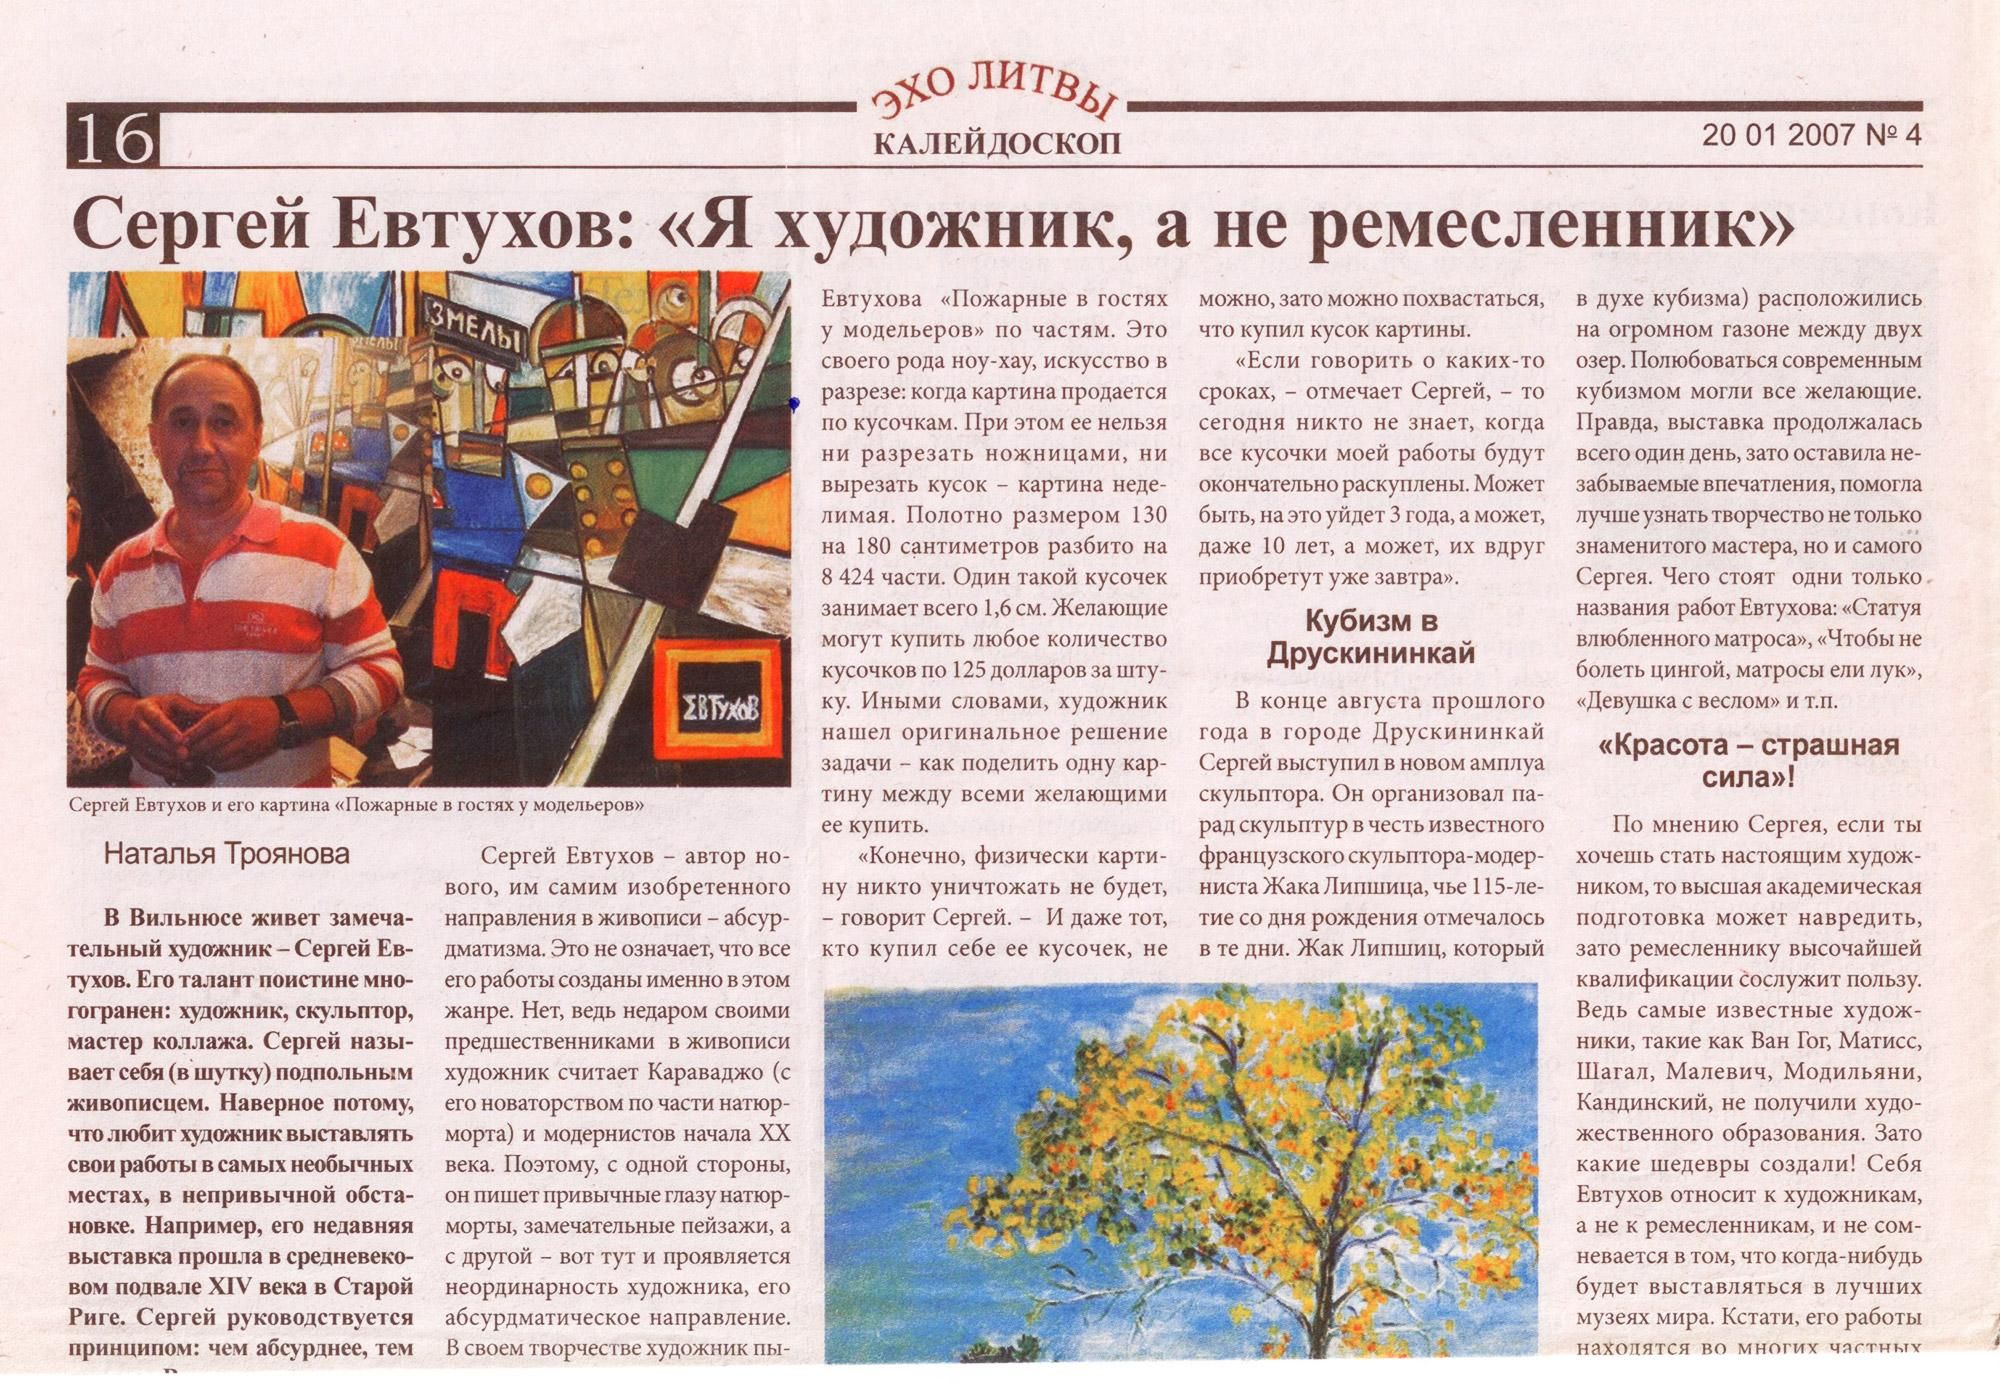 Article in the Vilnius newspaper<b>"Литовский курьер"</b>(fragment)